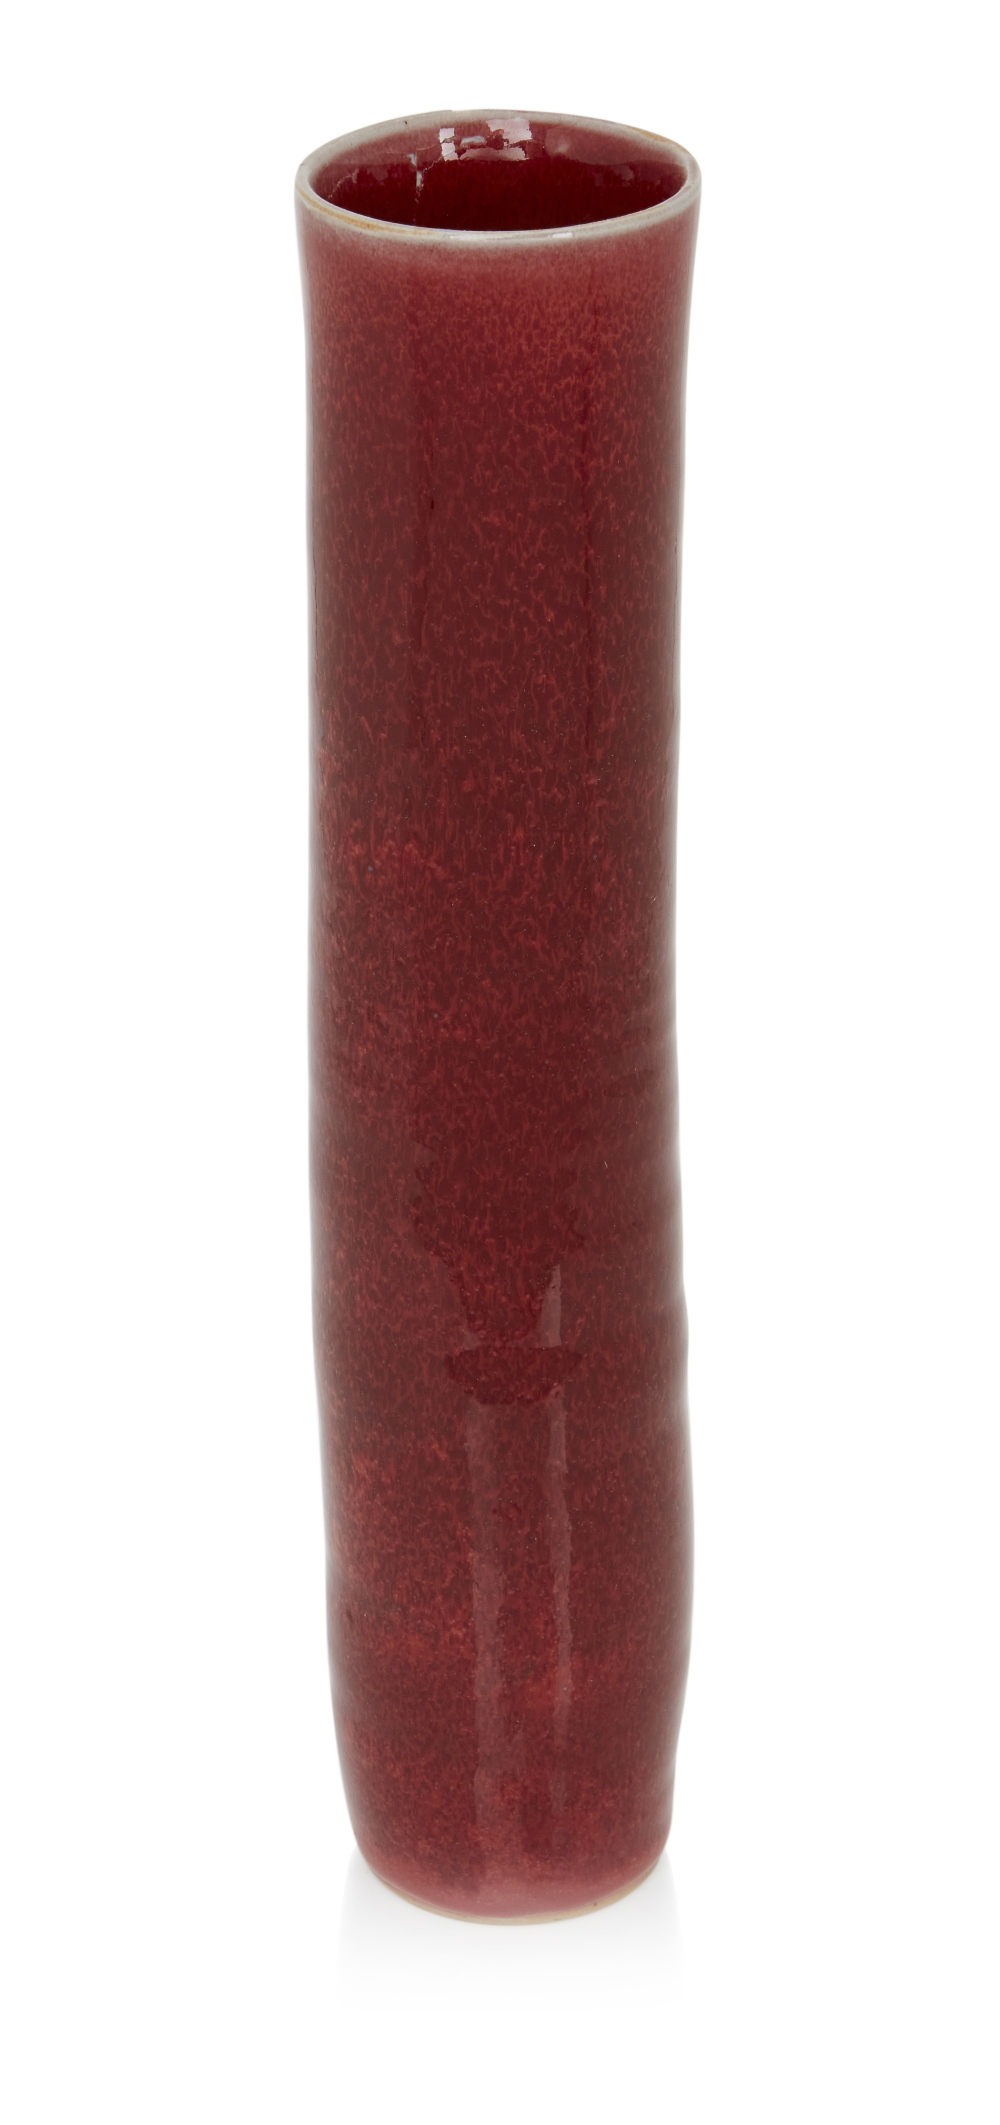 Rupert Spira (b.1960), Studio Pottery cylinder vase, circa 2000, Stoneware, deep red glaze with pale